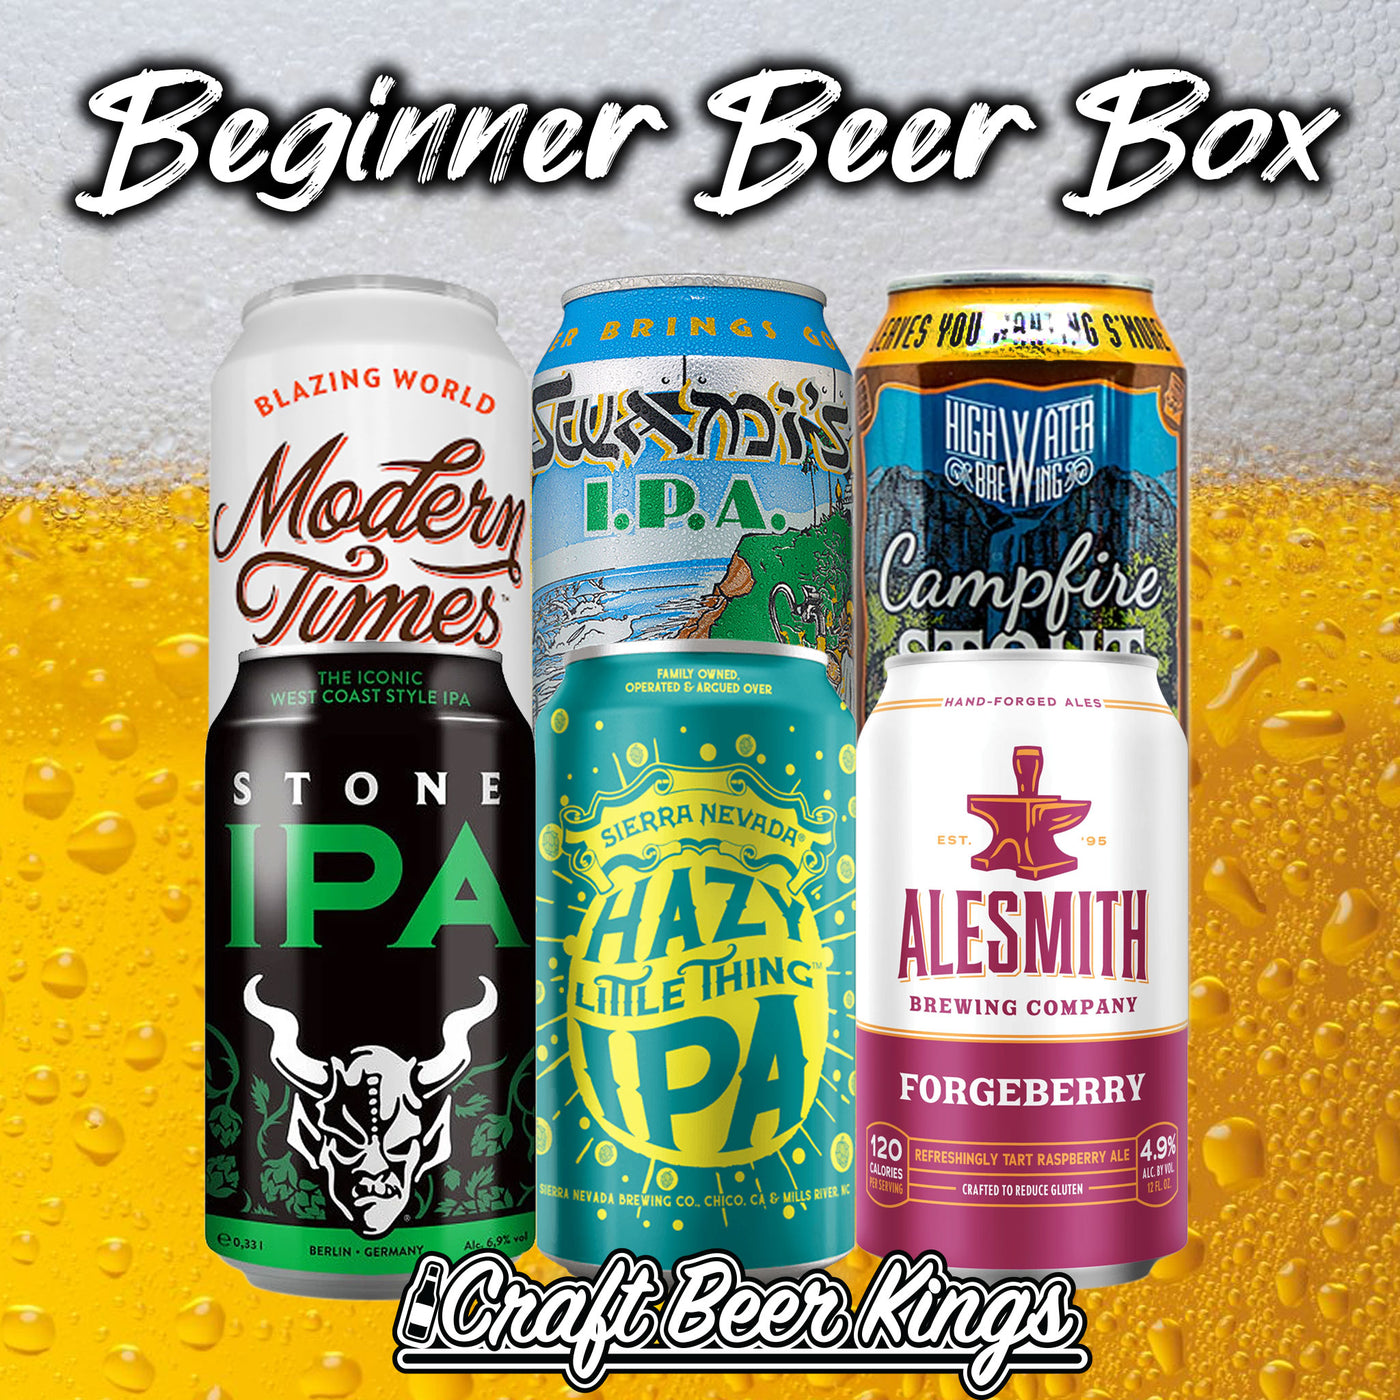 Beginner Beer Box - Free shipping!